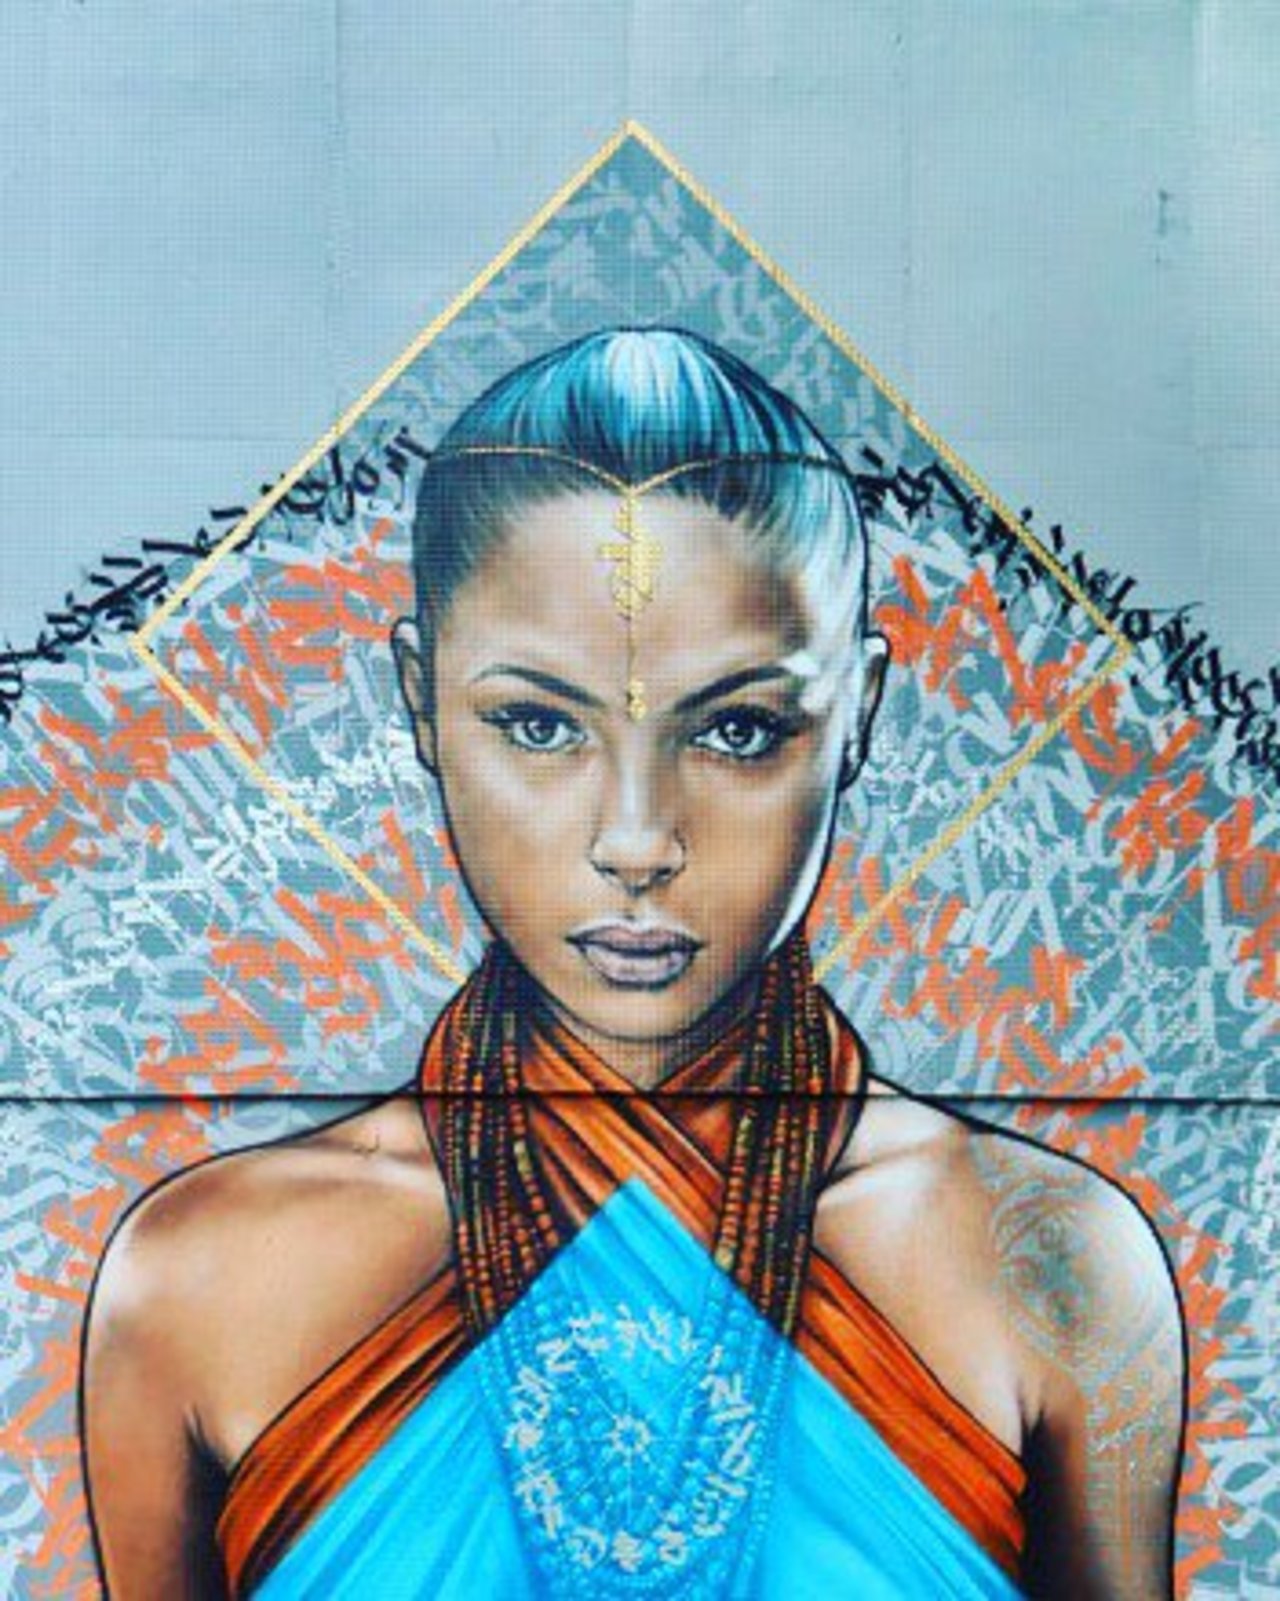 circumjacent_fr: #Paris #graffiti photo by girlwithstyle78 http://ift.tt/1McbVQ3 #StreetArt https://t.co/Oaj4135Tks